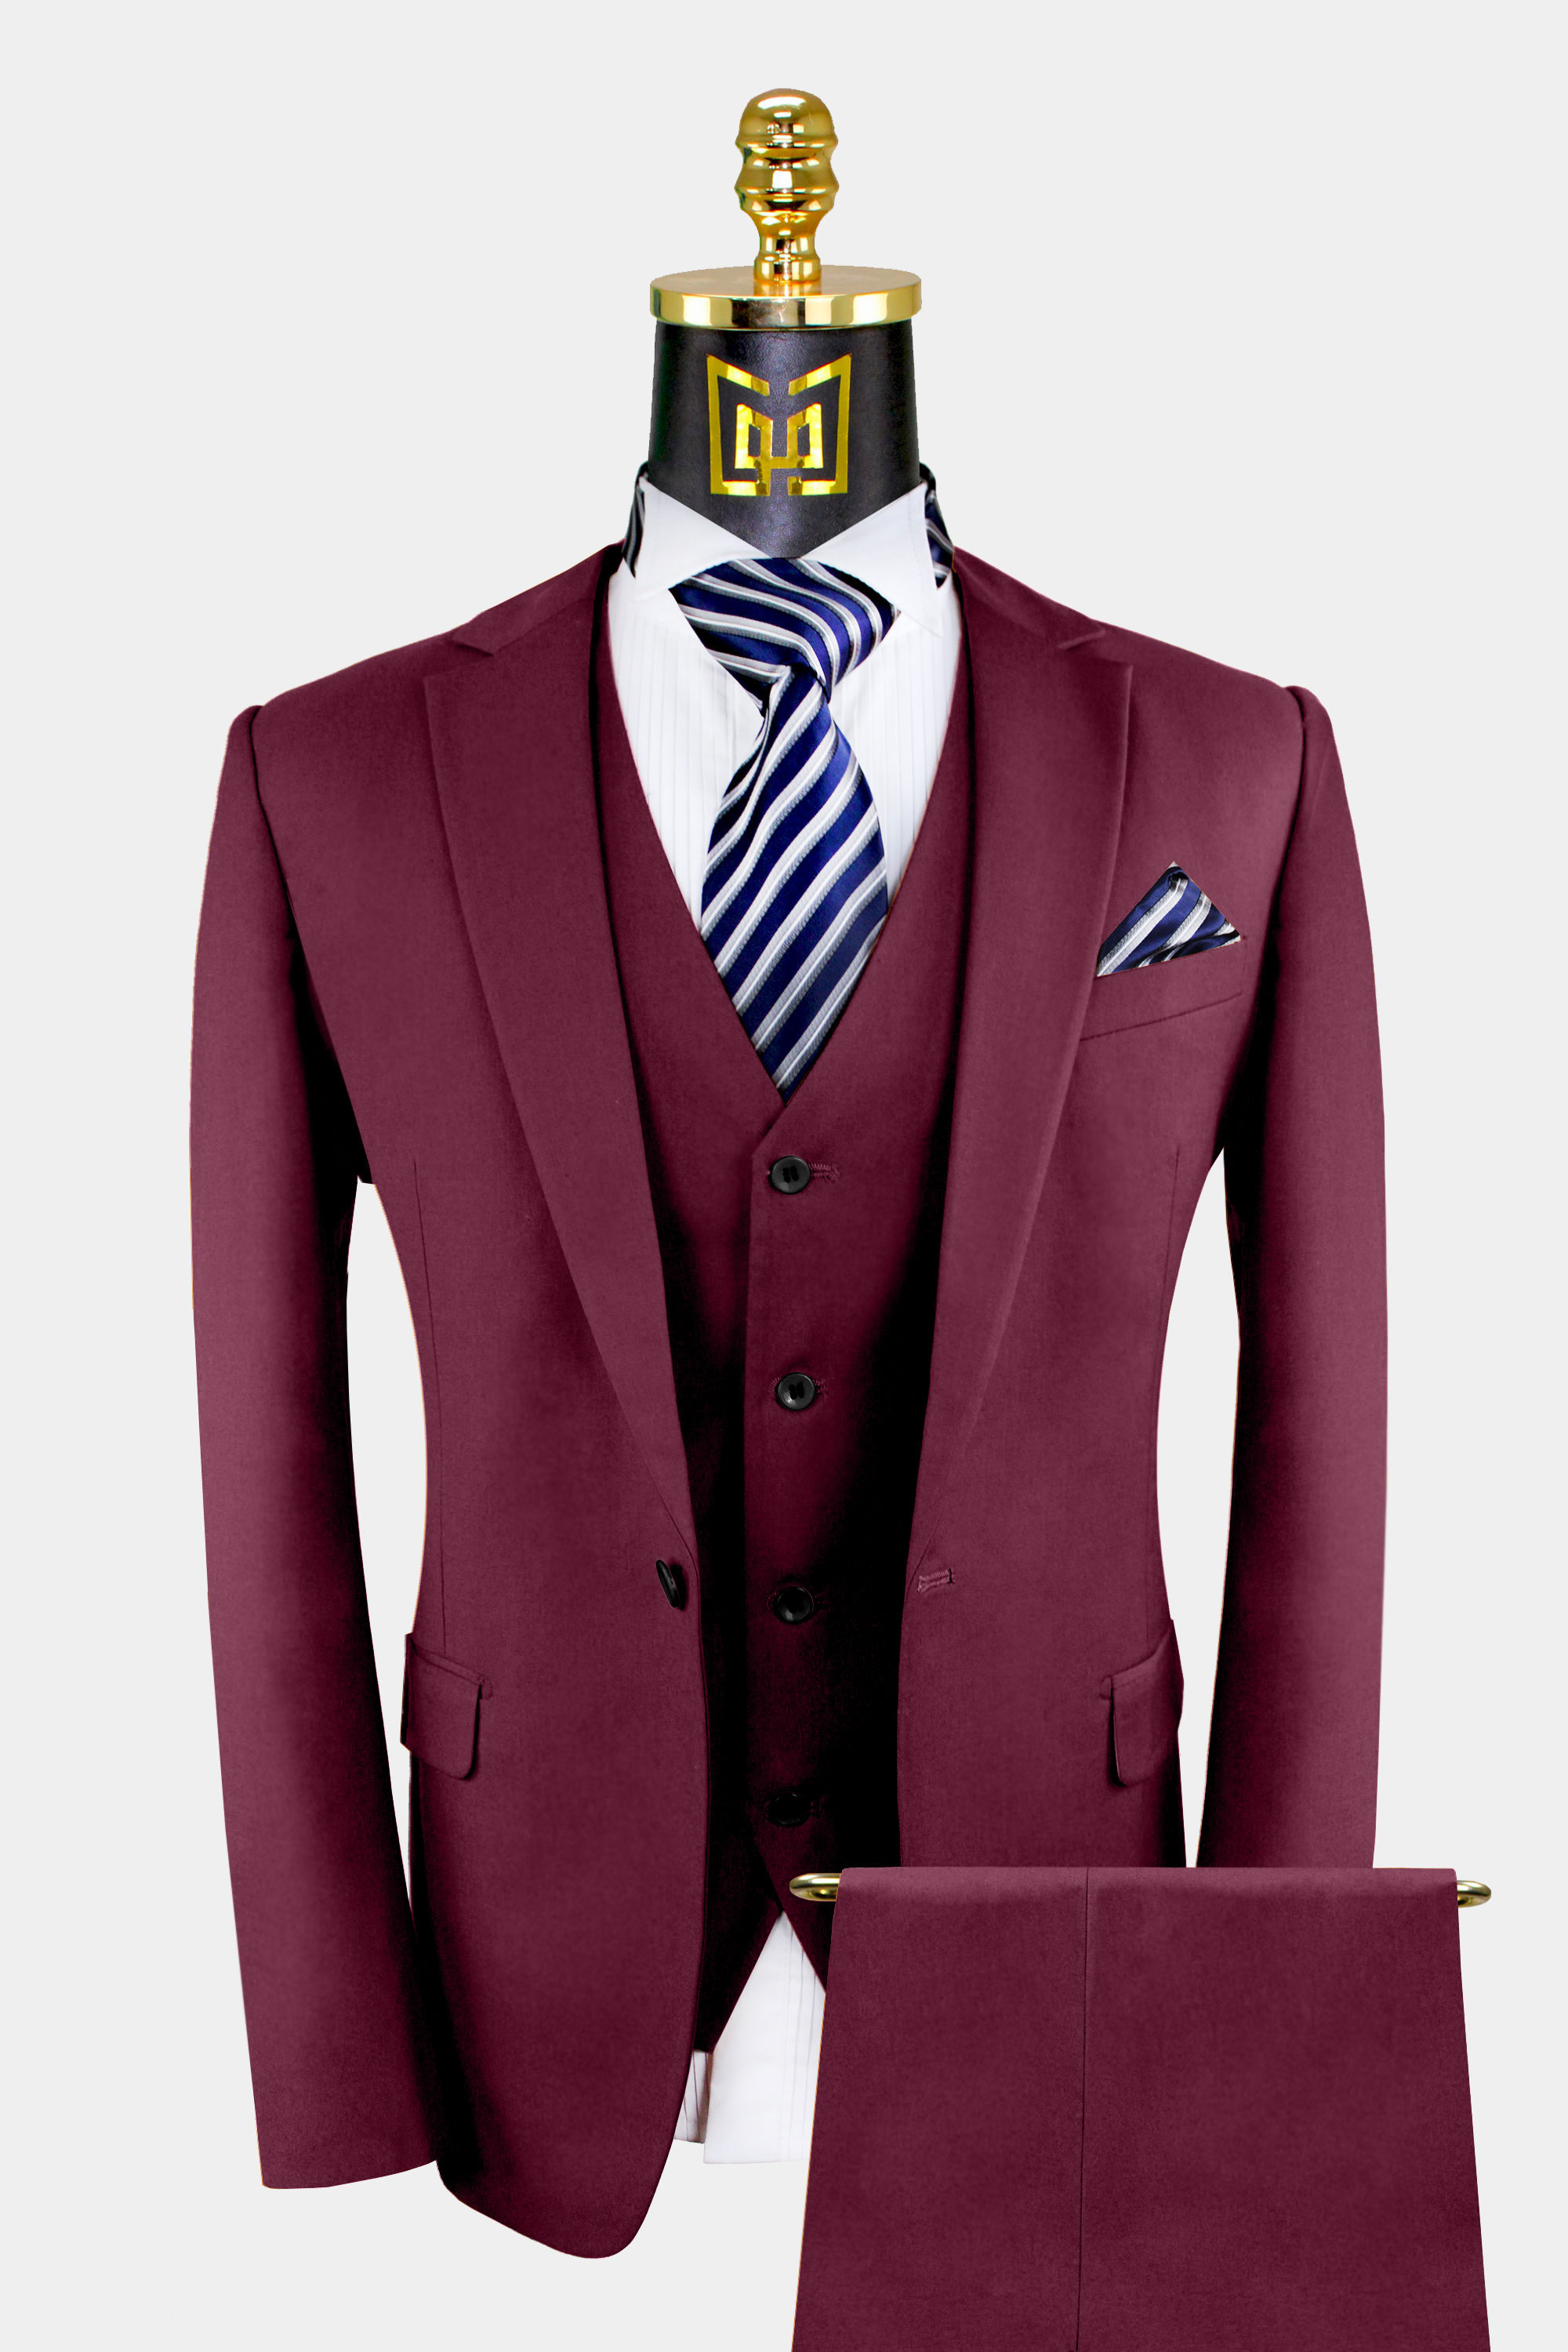 Burgundy Men Groom Suits 3 Piece Wedding Jacket Pants Size 38r 40r 42r 44r 46r 